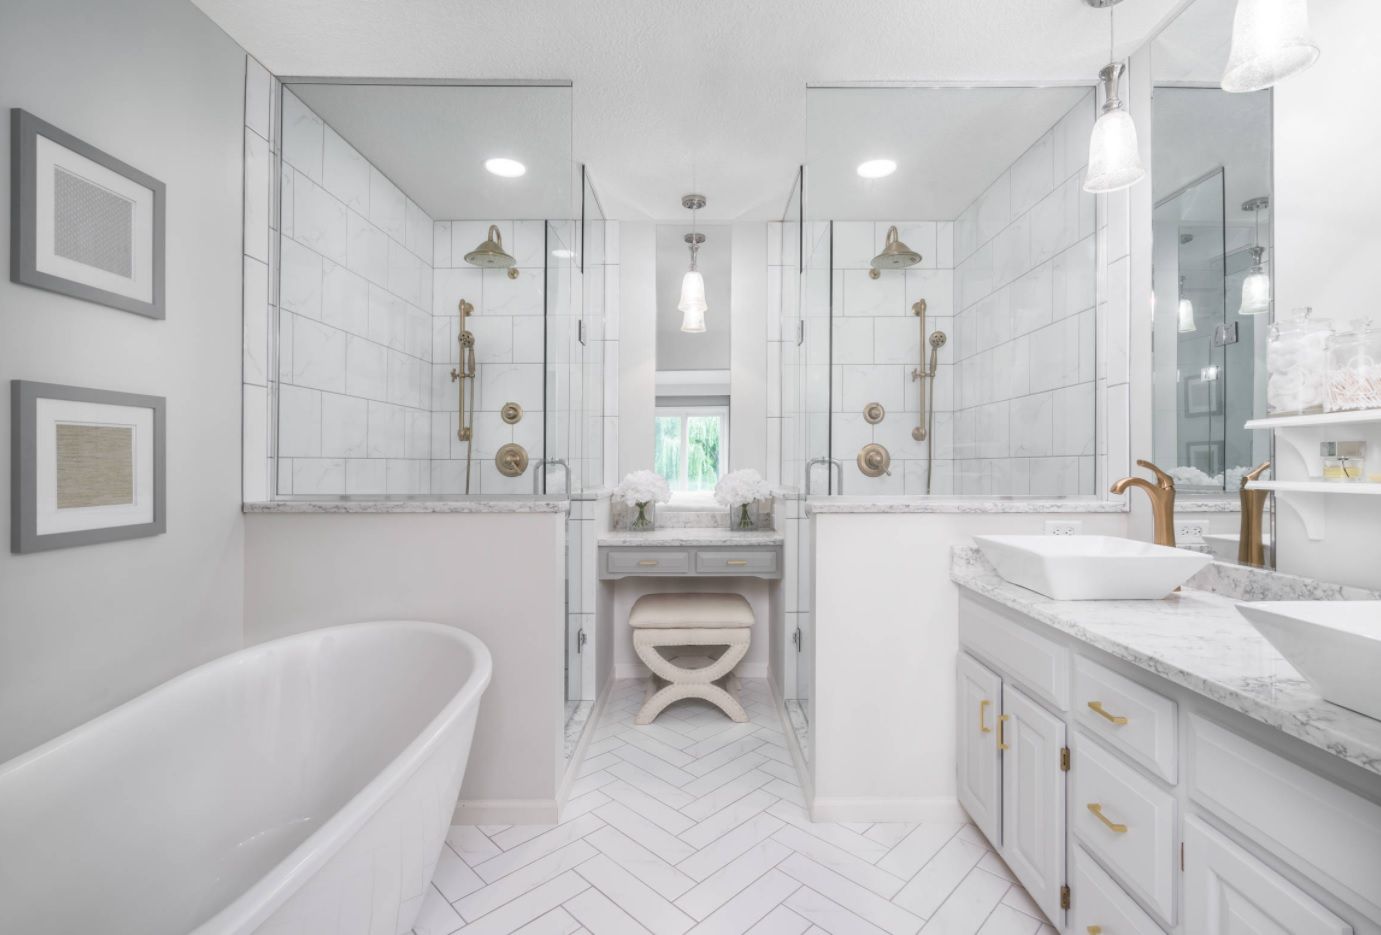 Jack and Jill Bathroom Interior Design Ideas - Small ...